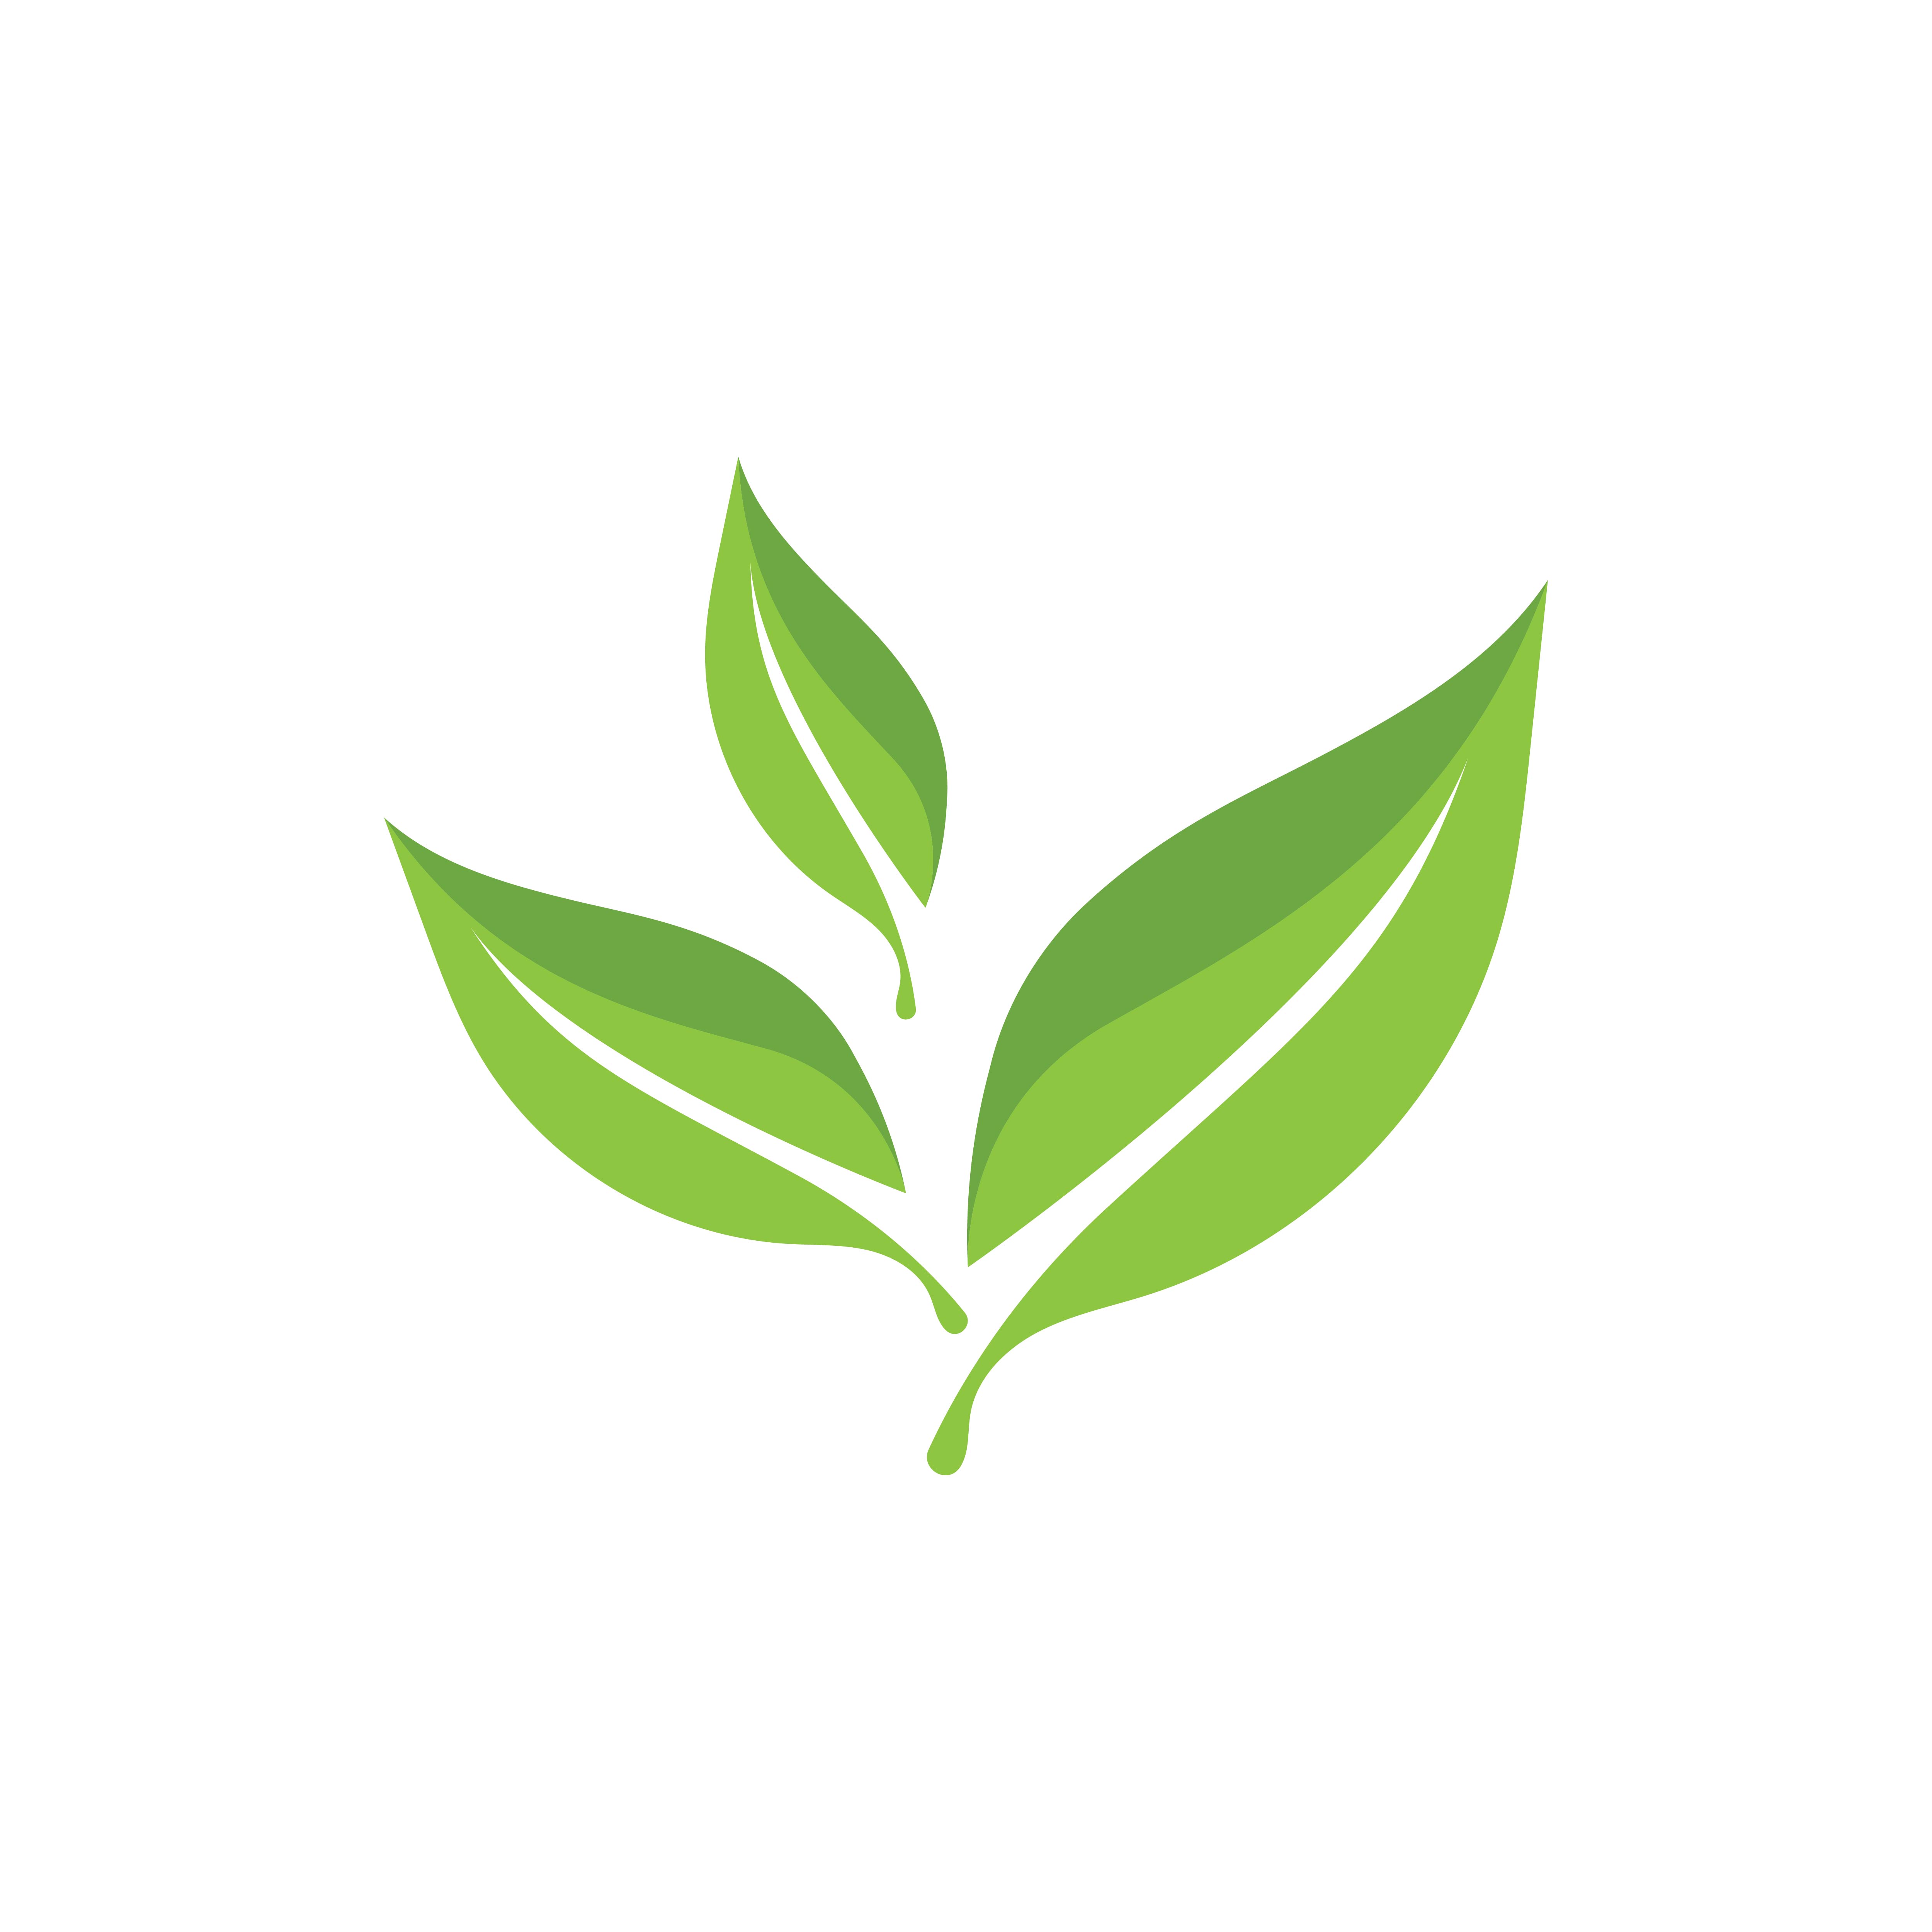 green leaf ecology nature element vector 596052 - Download Free Vectors